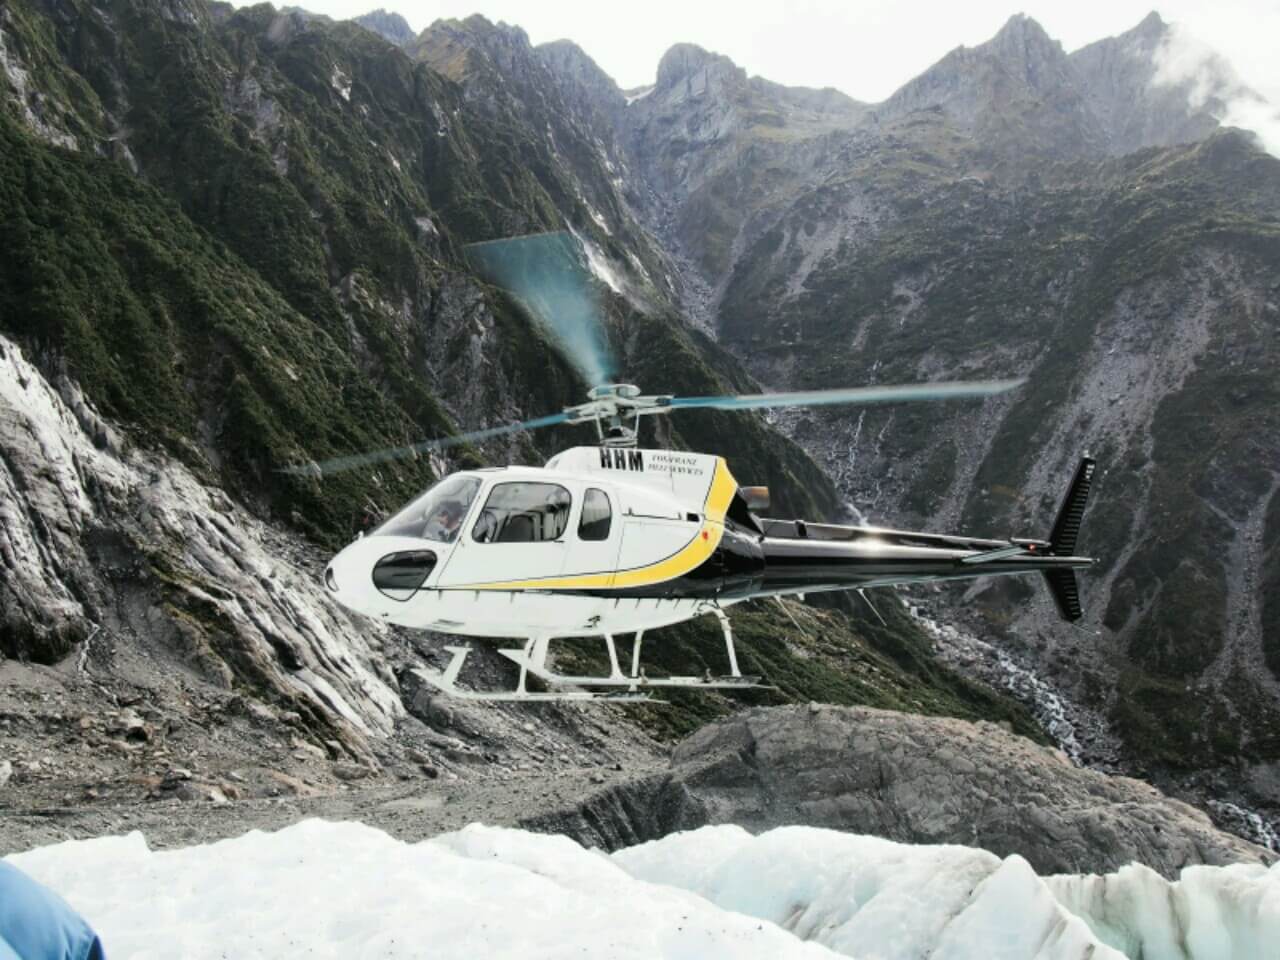 Landing on the glacier